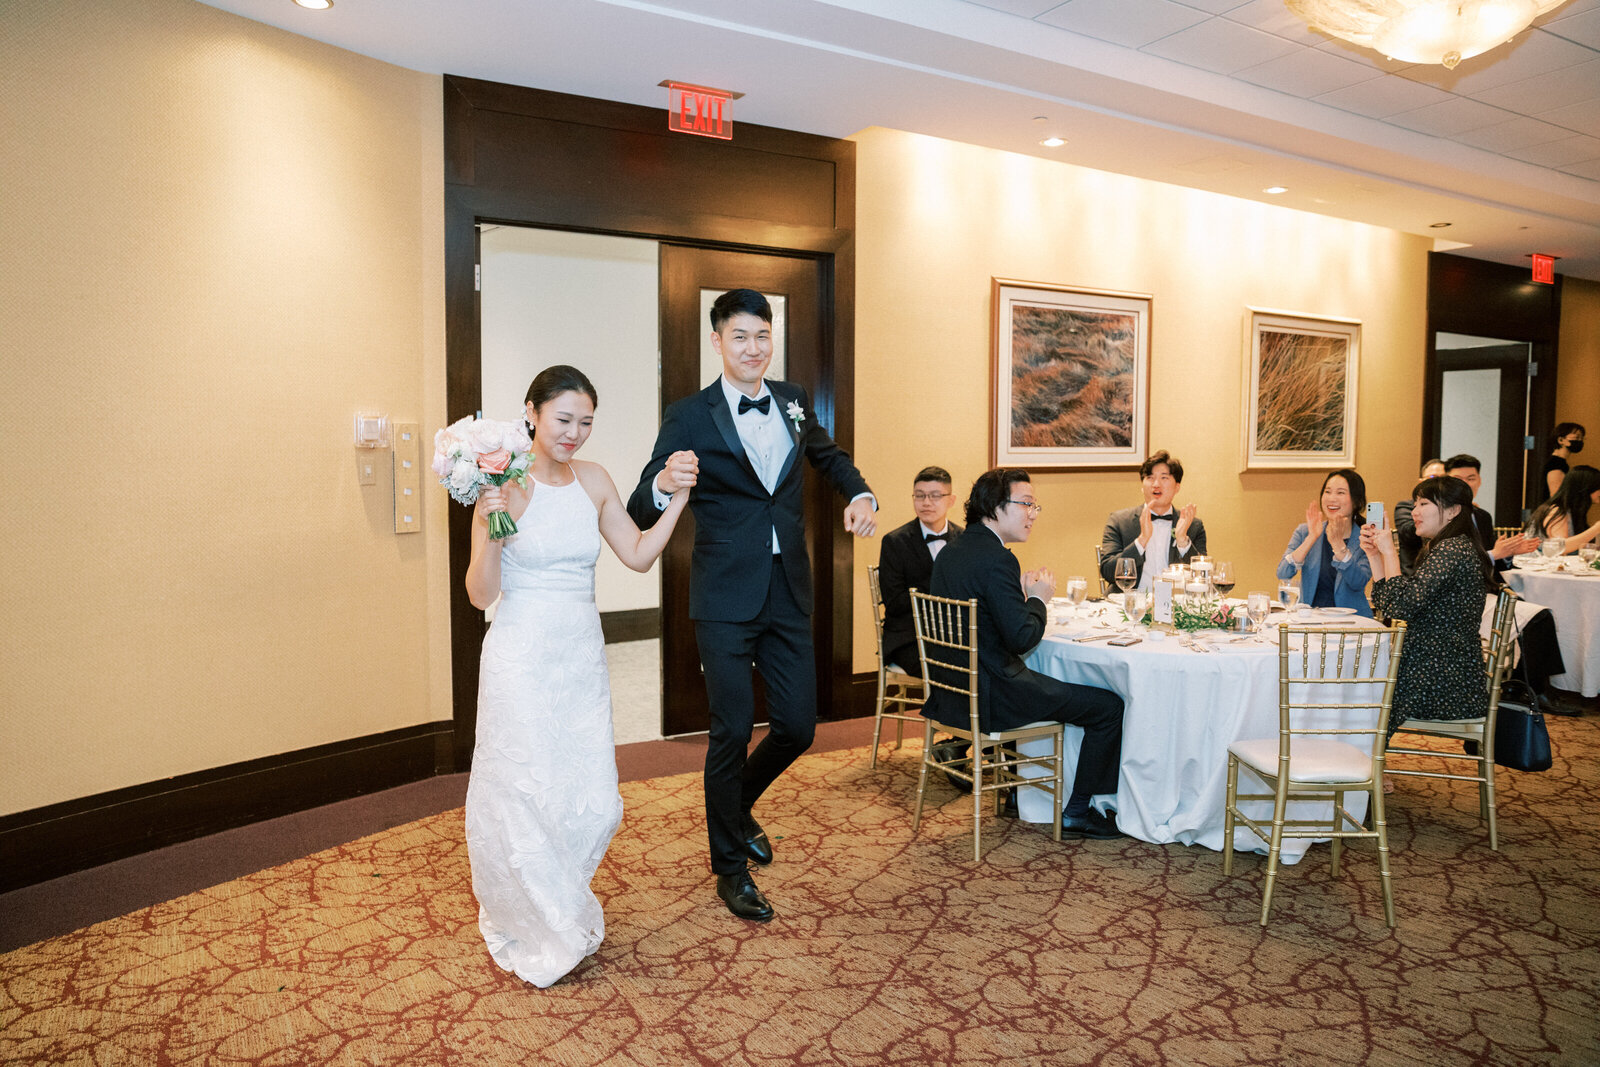 Bride and groom enter the reception cheering